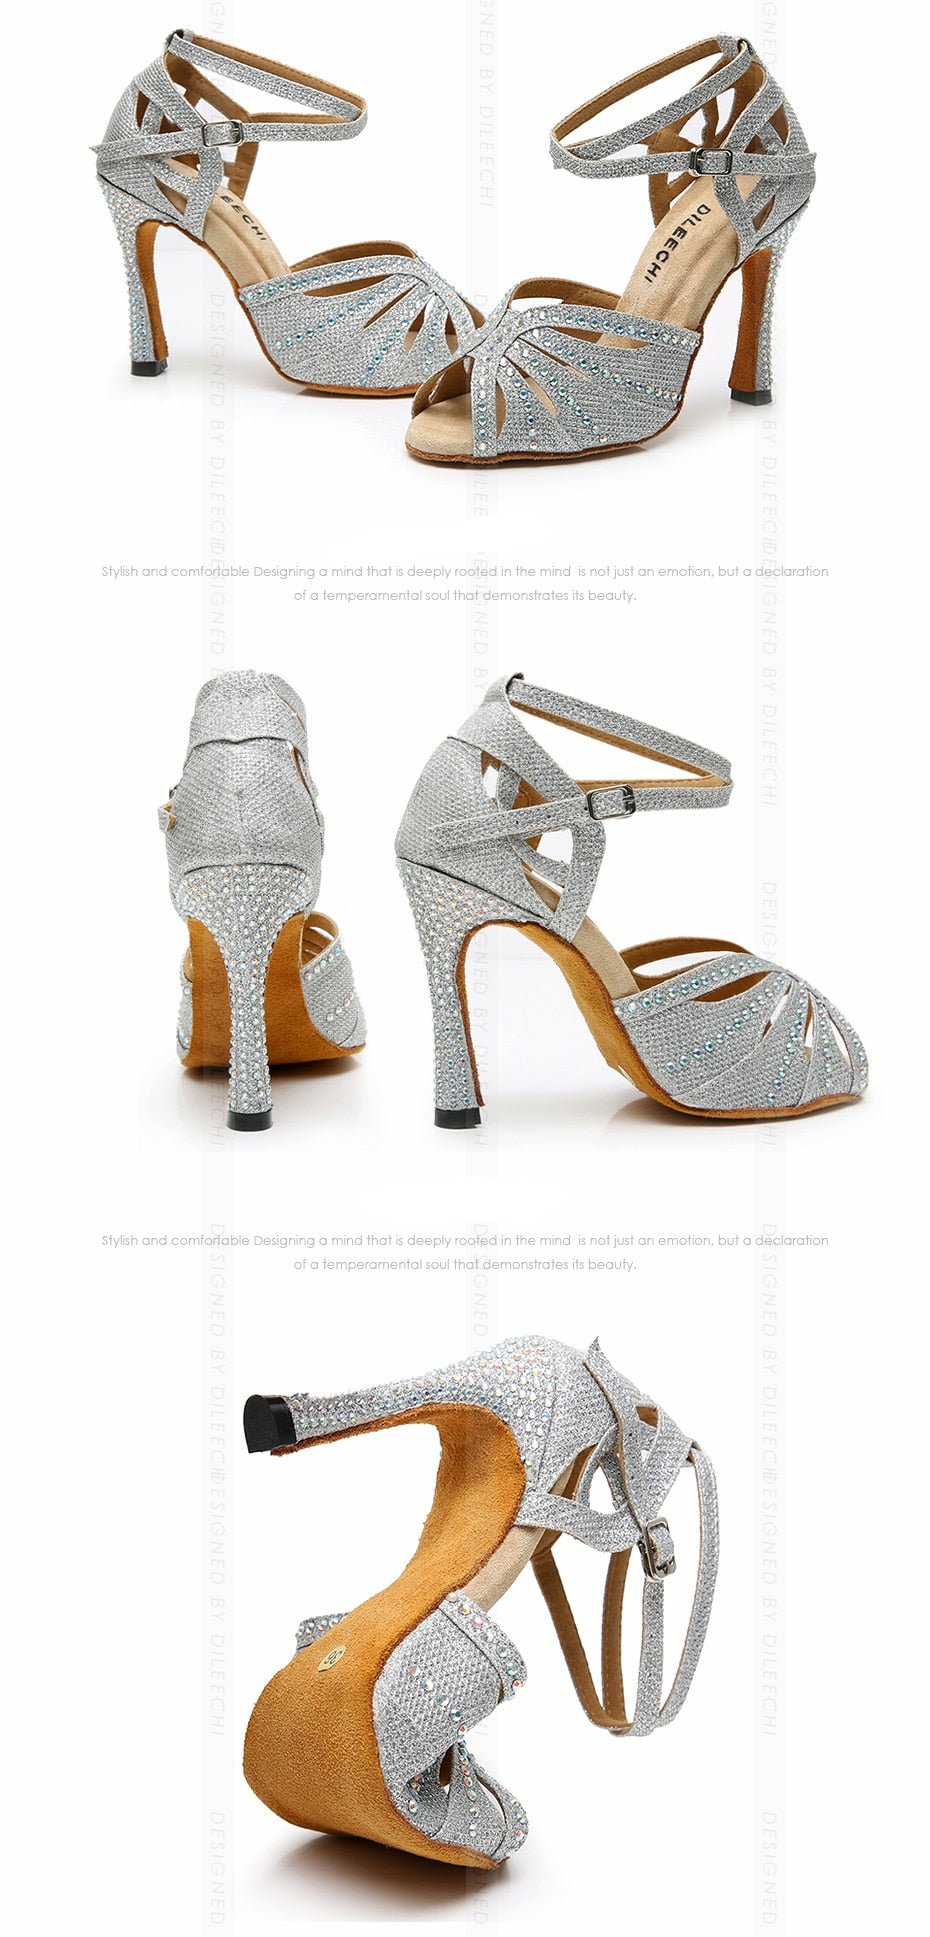 Buy BABEYOND Ballroom Dance Shoes Women - Latin Salsa Closed Toe Pumps  1920s Retro Party Wedding Heels Black at Amazon.in